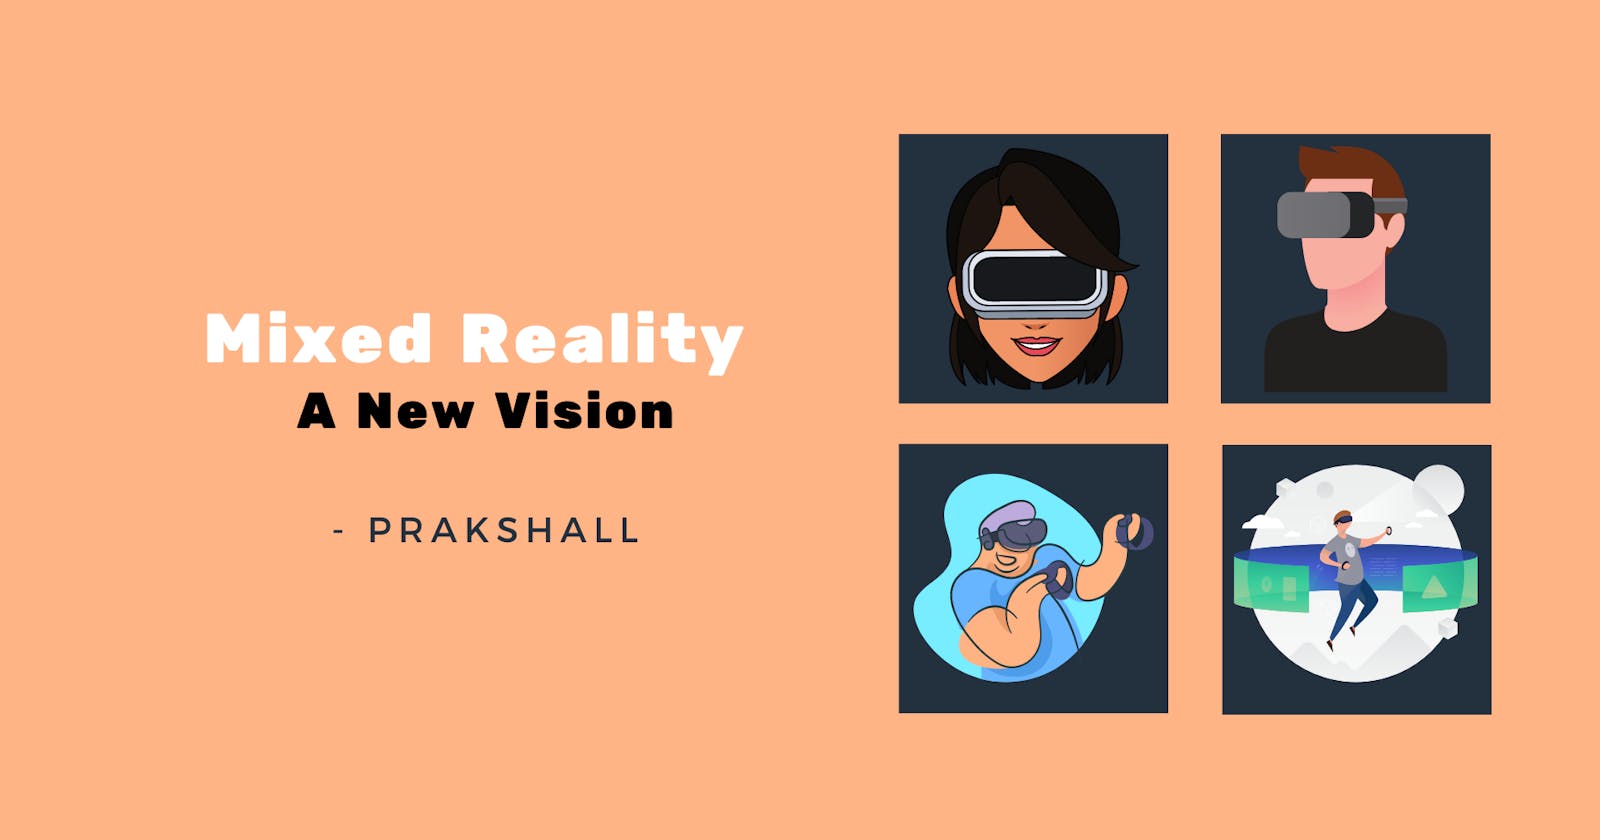 Mixed Reality - A New Vision